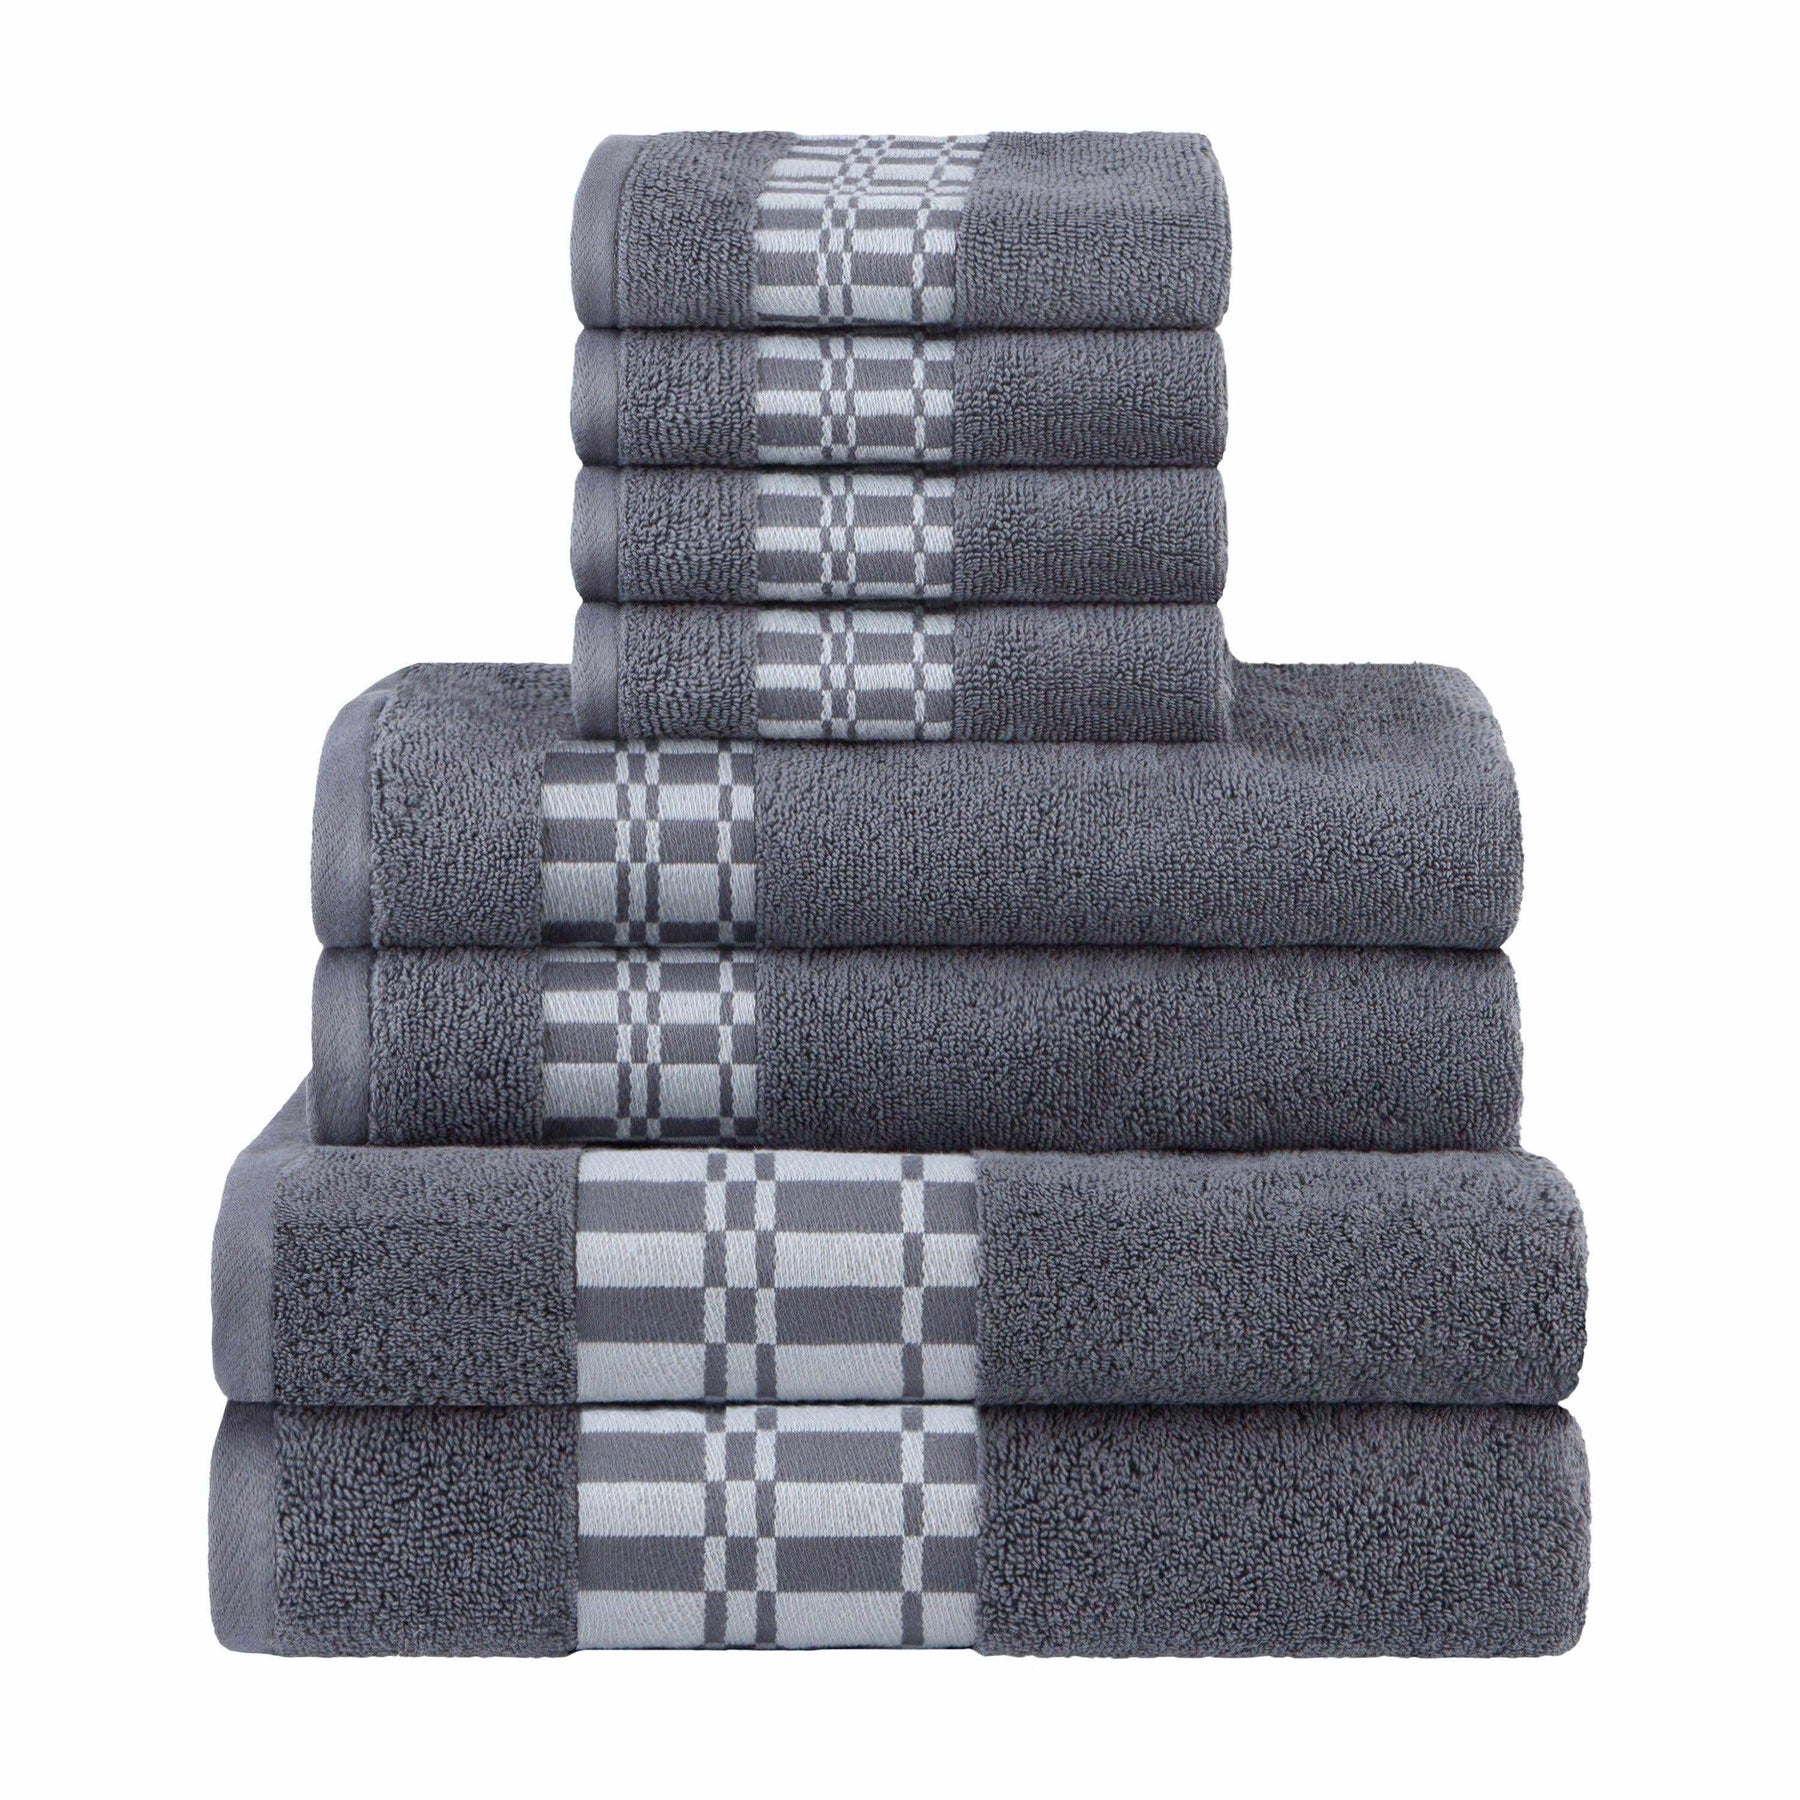  Superior Larissa Cotton 8-Piece Assorted Towel Set with Geometric Embroidered Jacquard Border - Grey